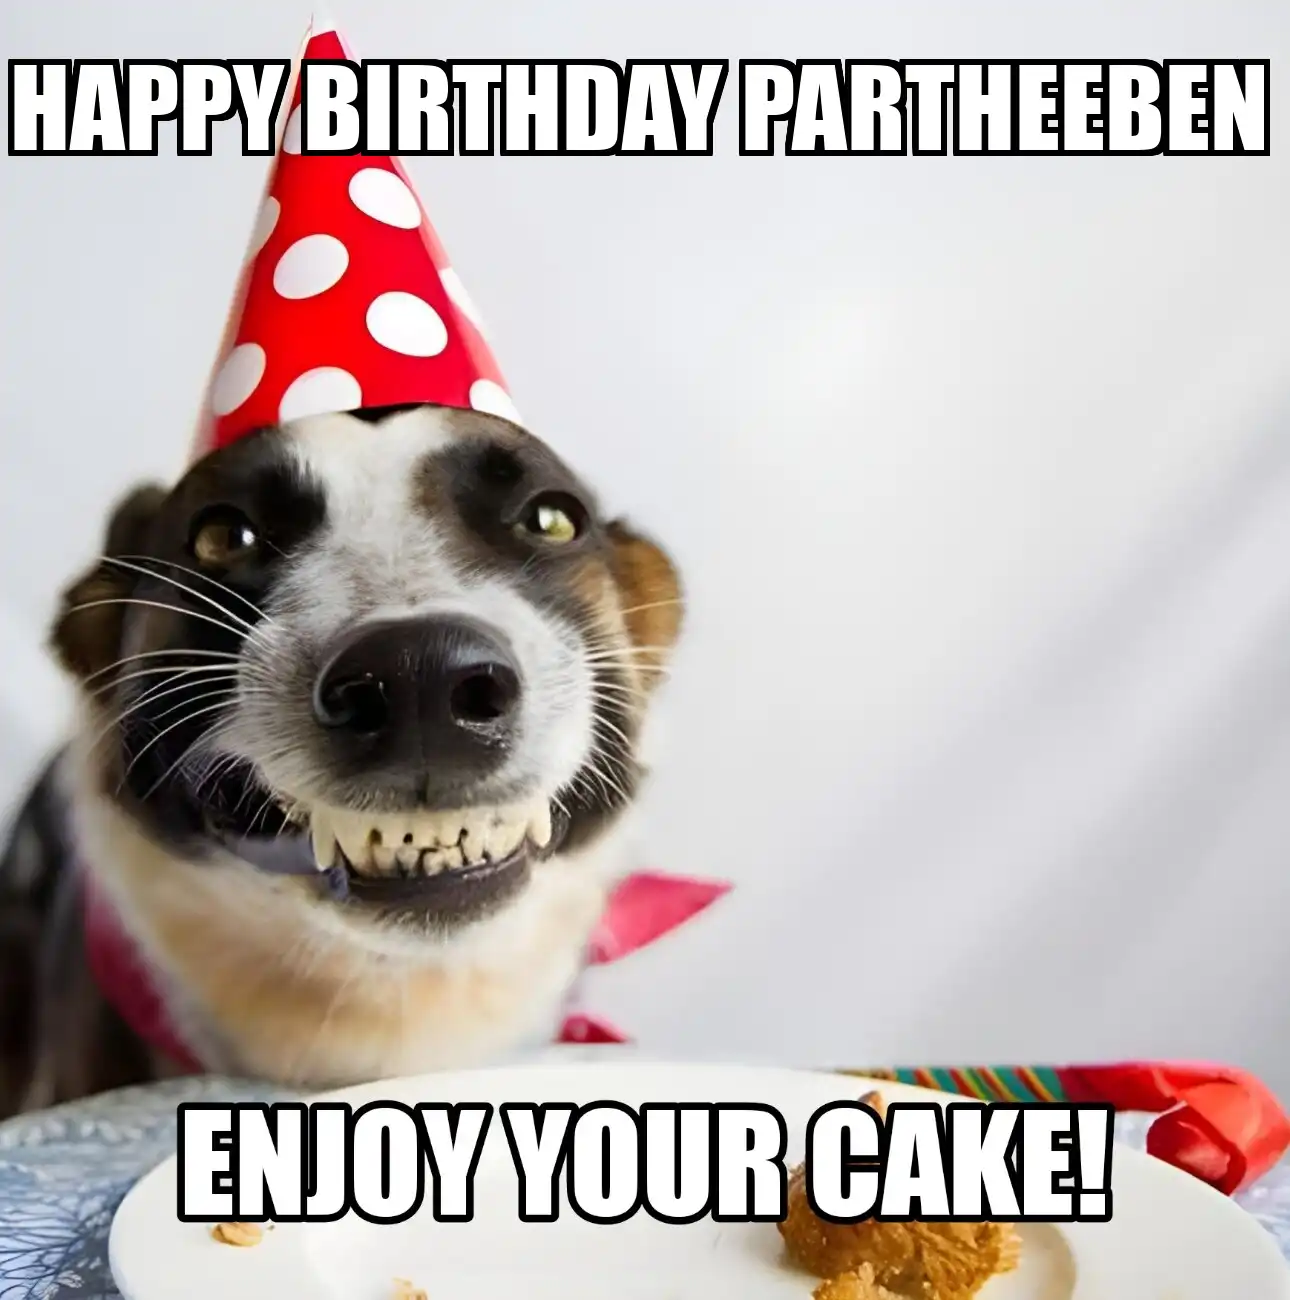 Happy Birthday Partheeben Enjoy Your Cake Dog Meme